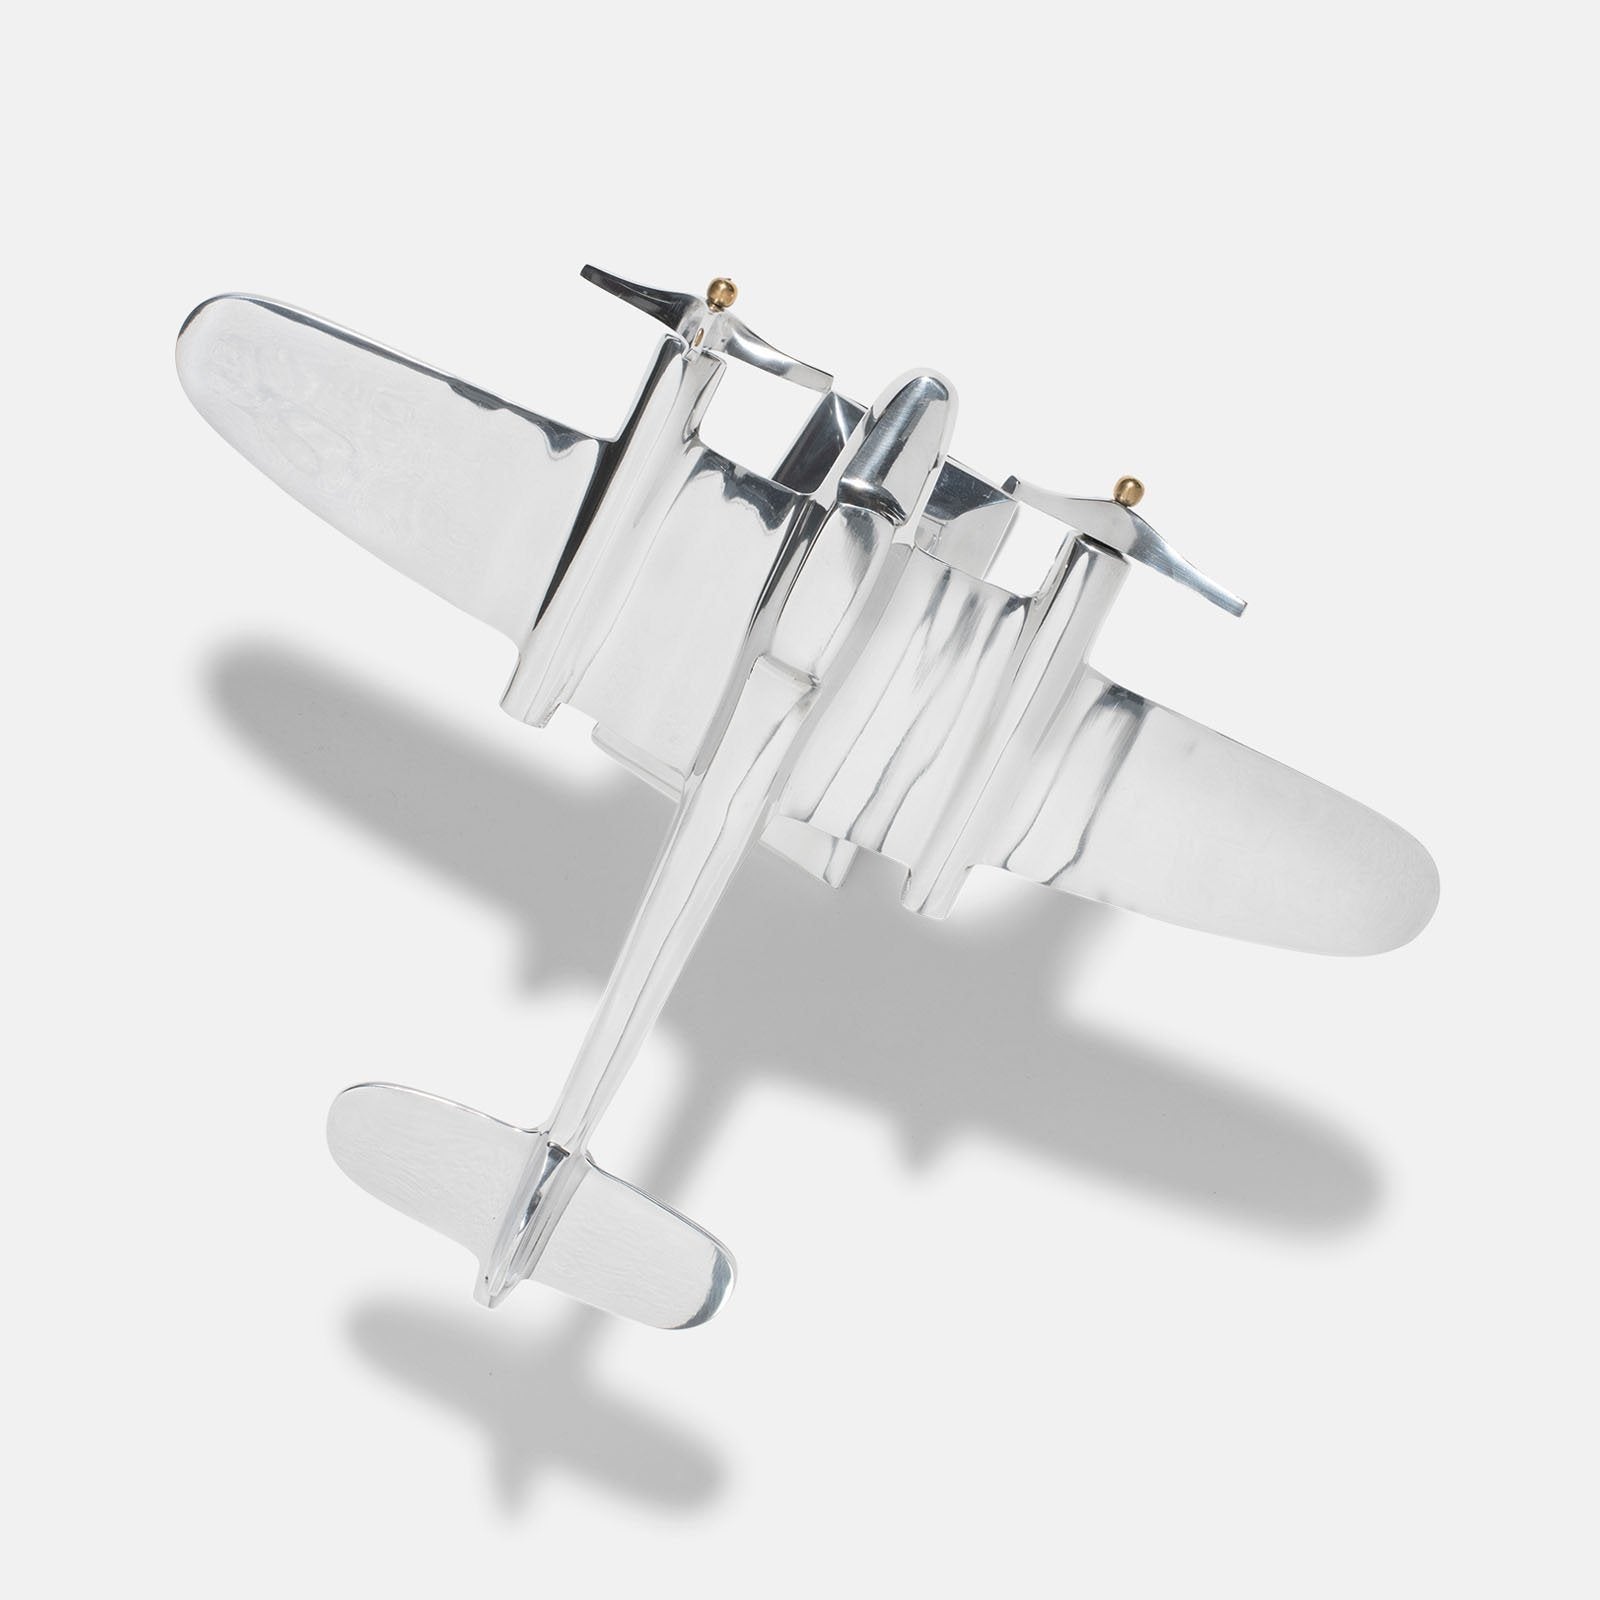 Art Deco Aluminium Air Plane Model